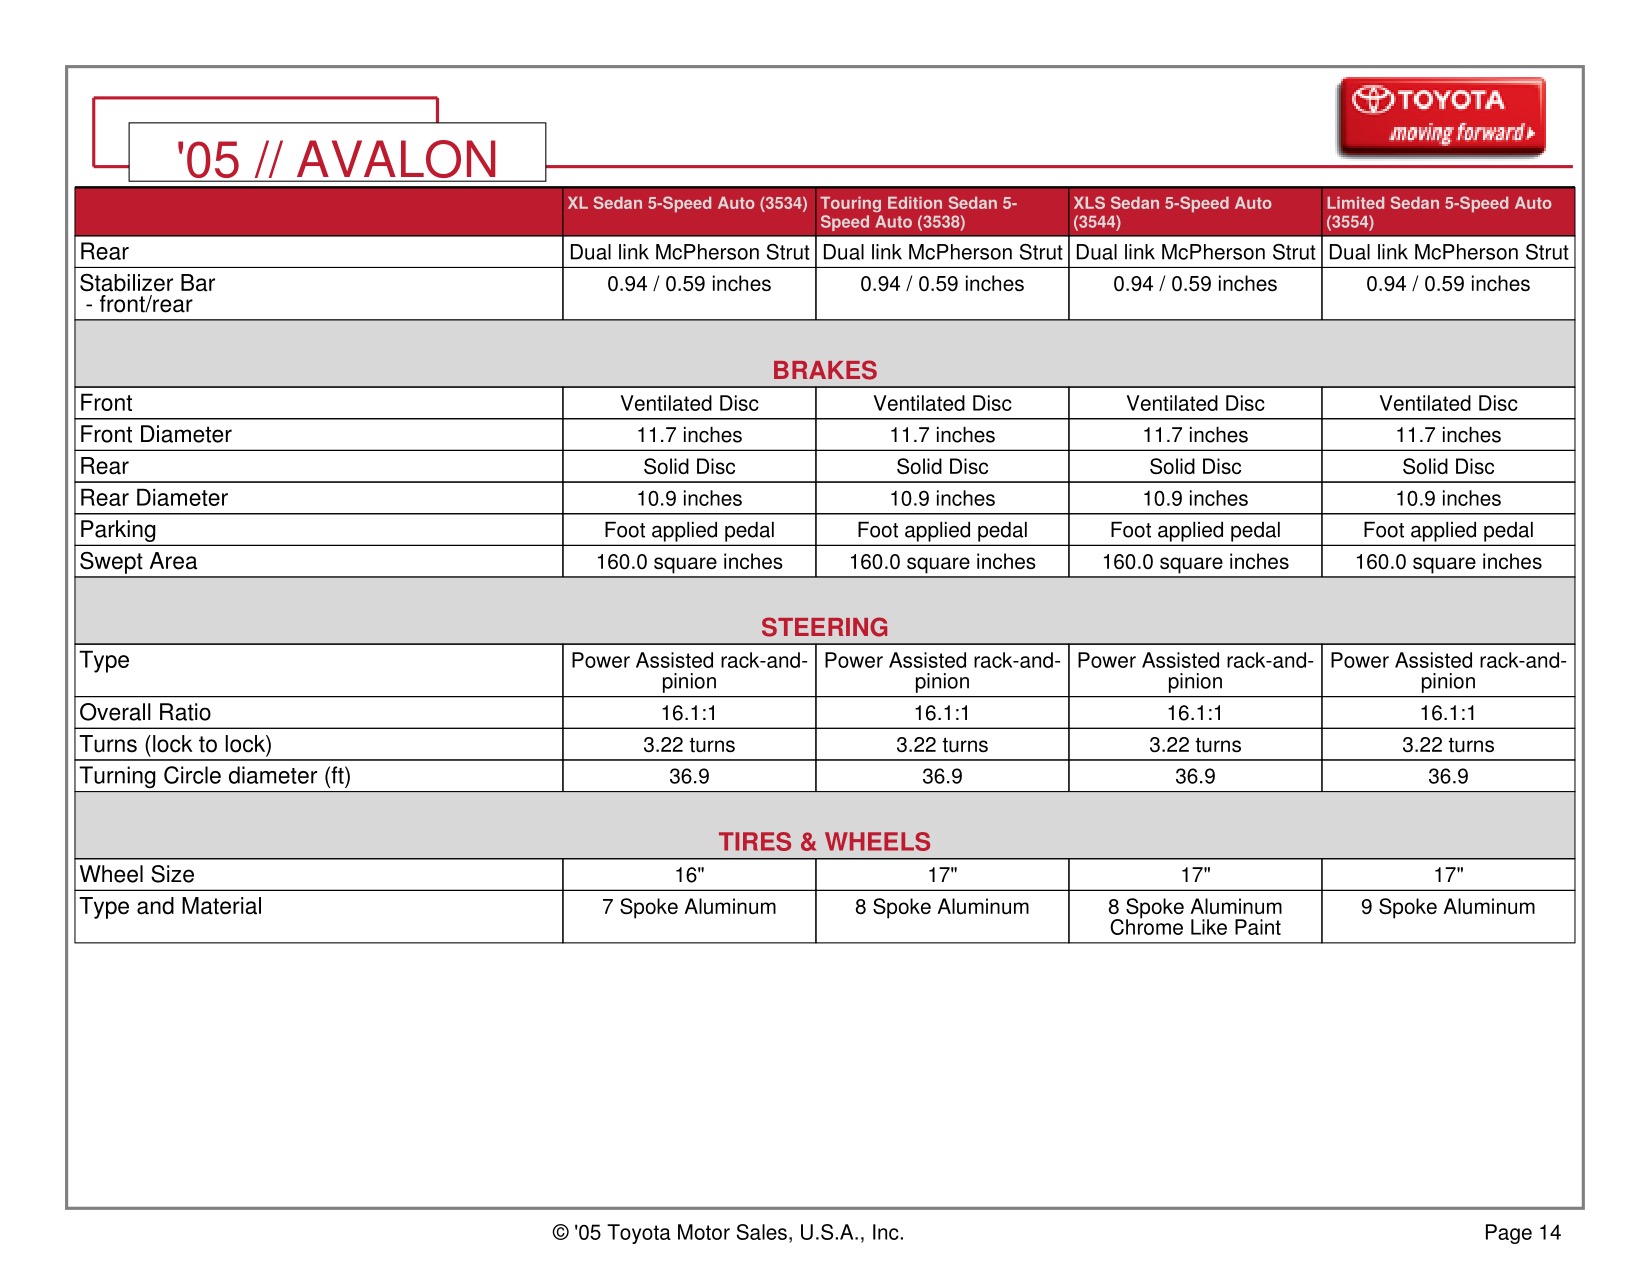 2005 Toyota Avalon Brochure Page 1